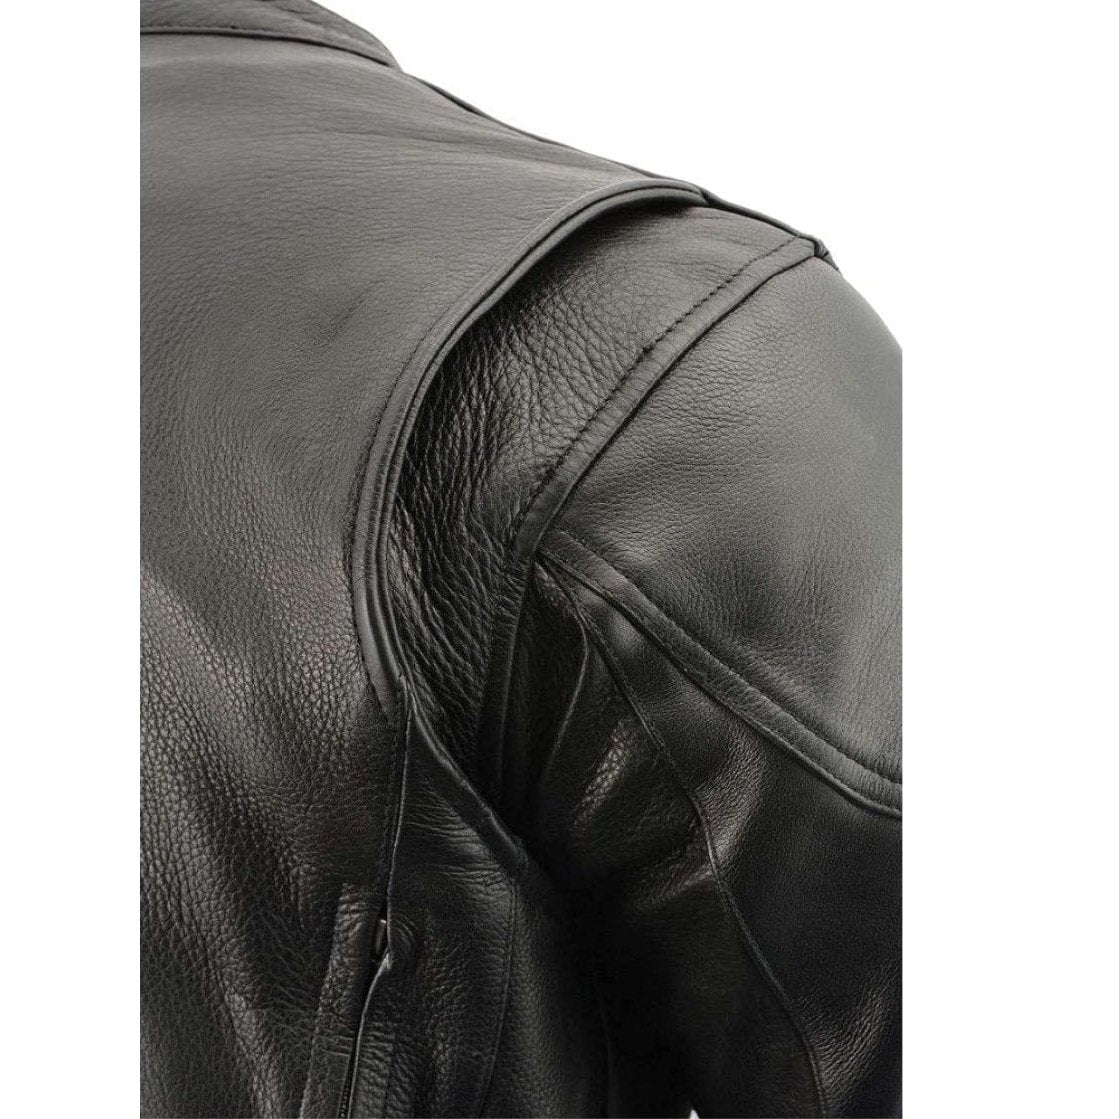 Milwaukee Leather Men's Motorcycle Jacket 1010N - Clearance - Milwaukee Leather